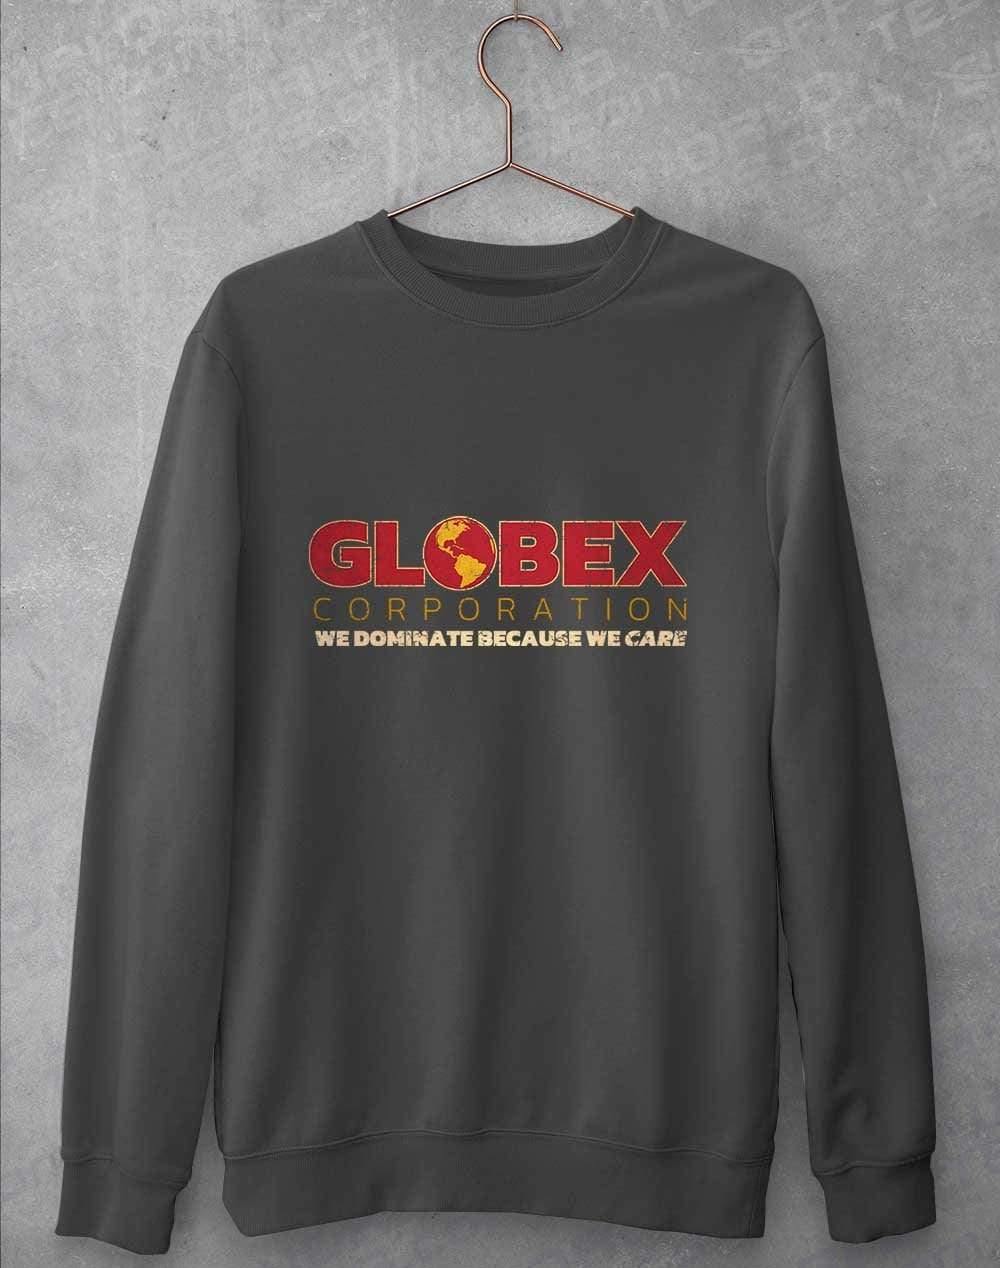 Globex Corporation Sweatshirt S / Charcoal  - Off World Tees